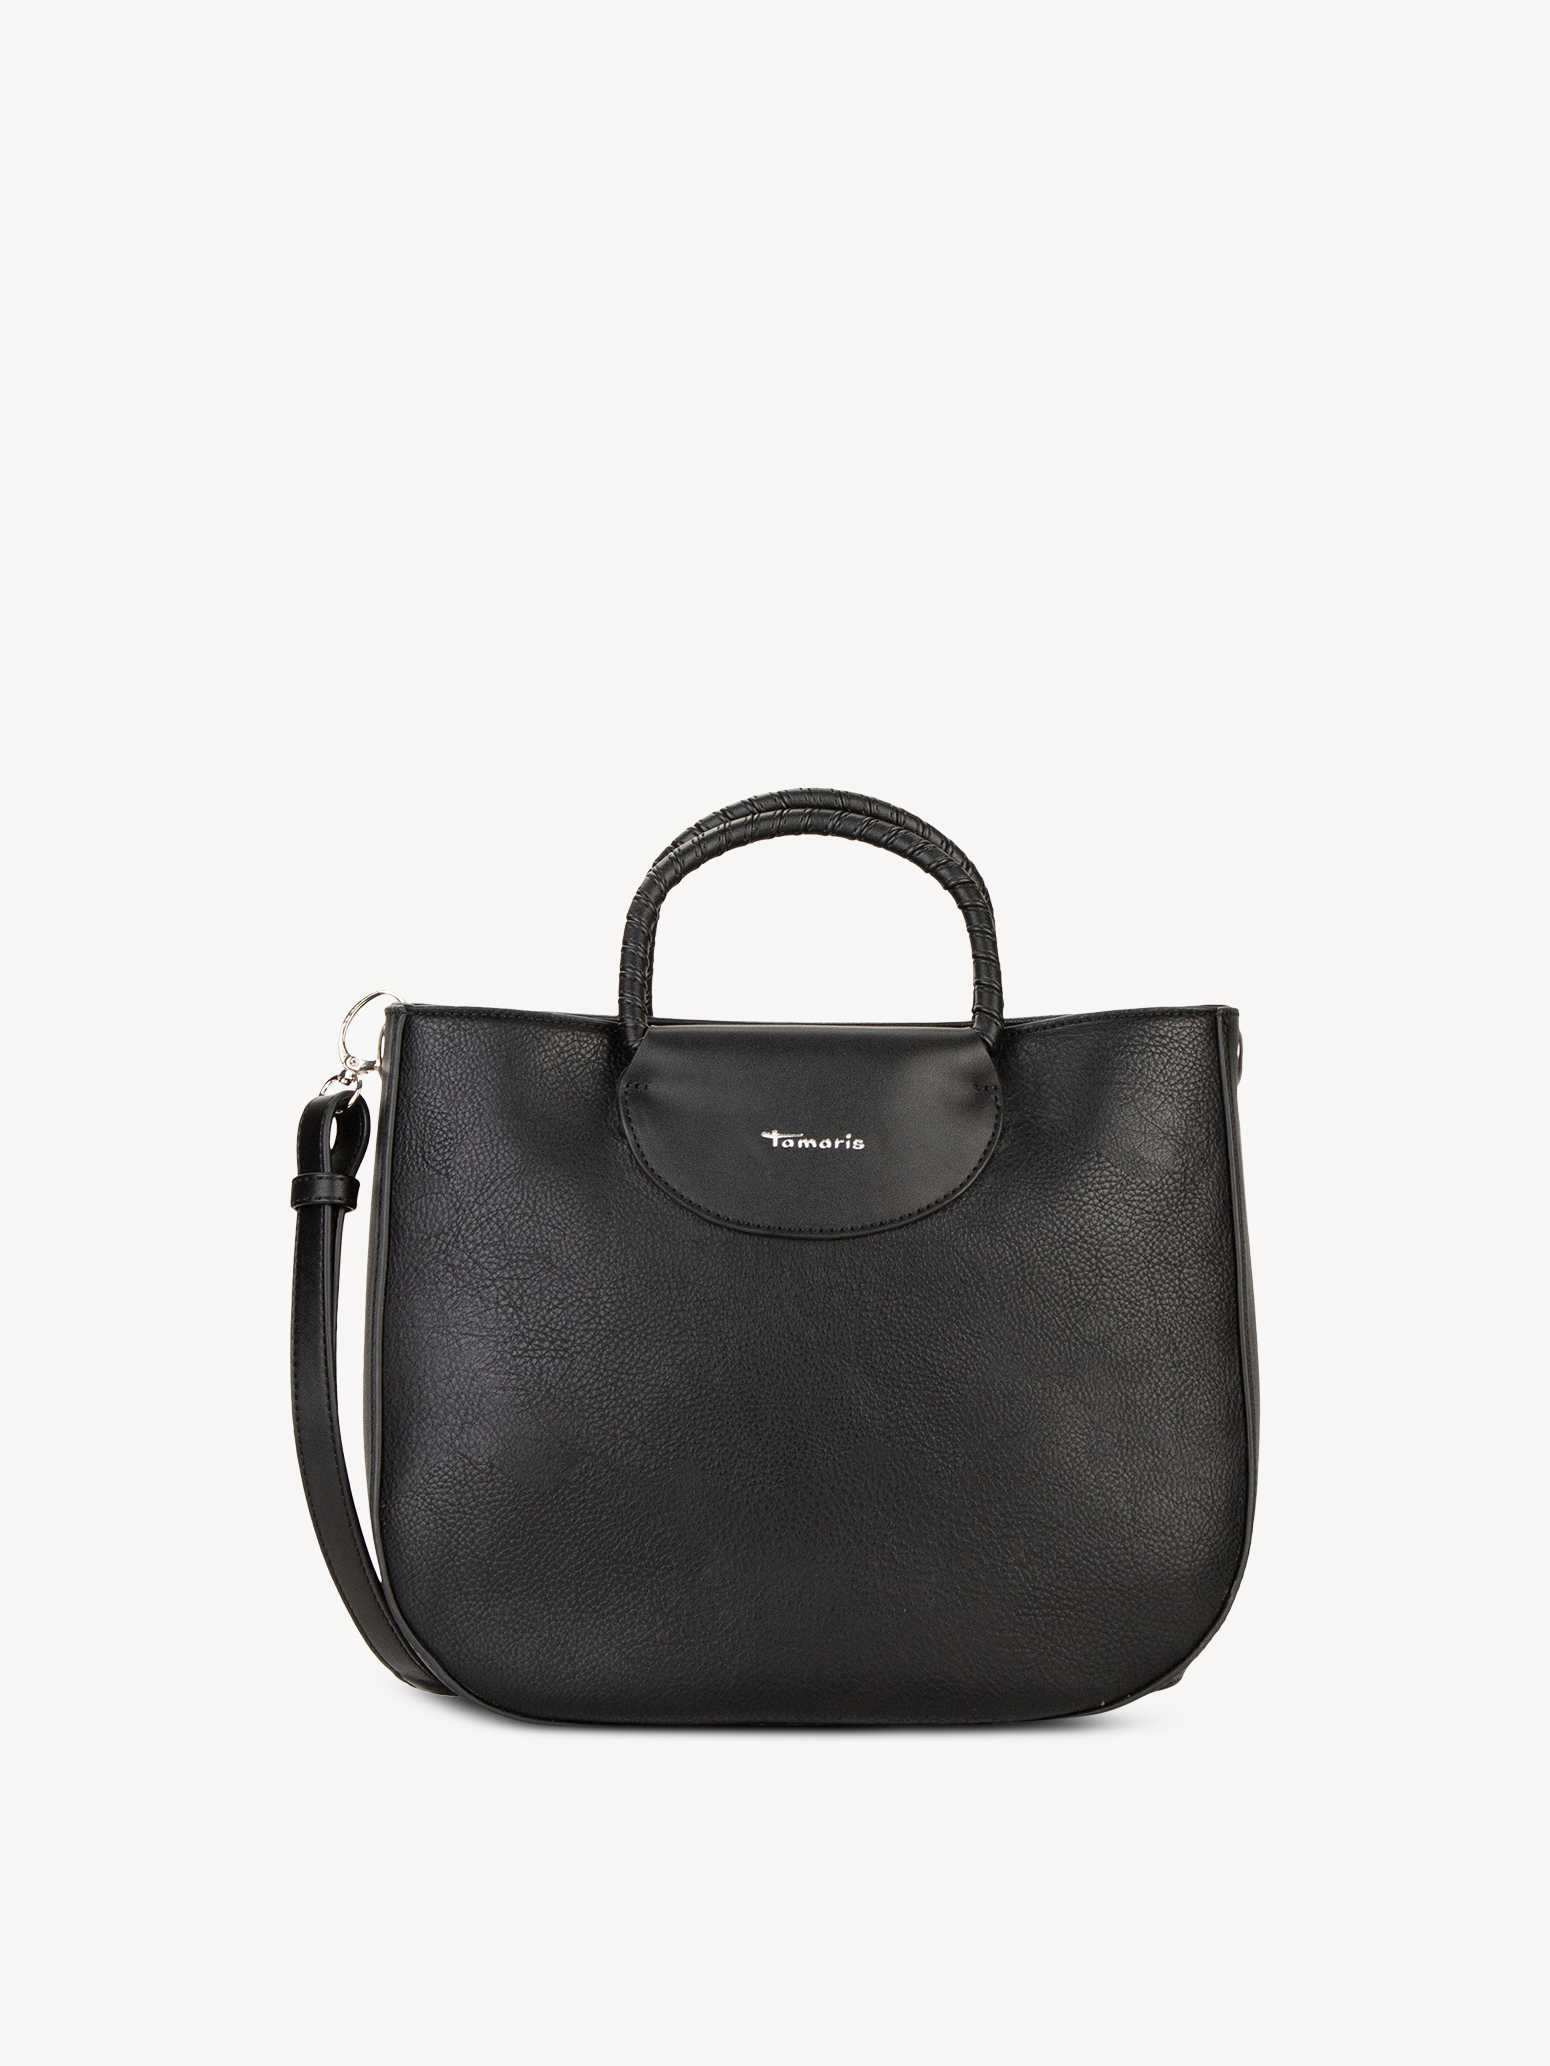 Shopping bag 30380: Buy Tamaris bags online!